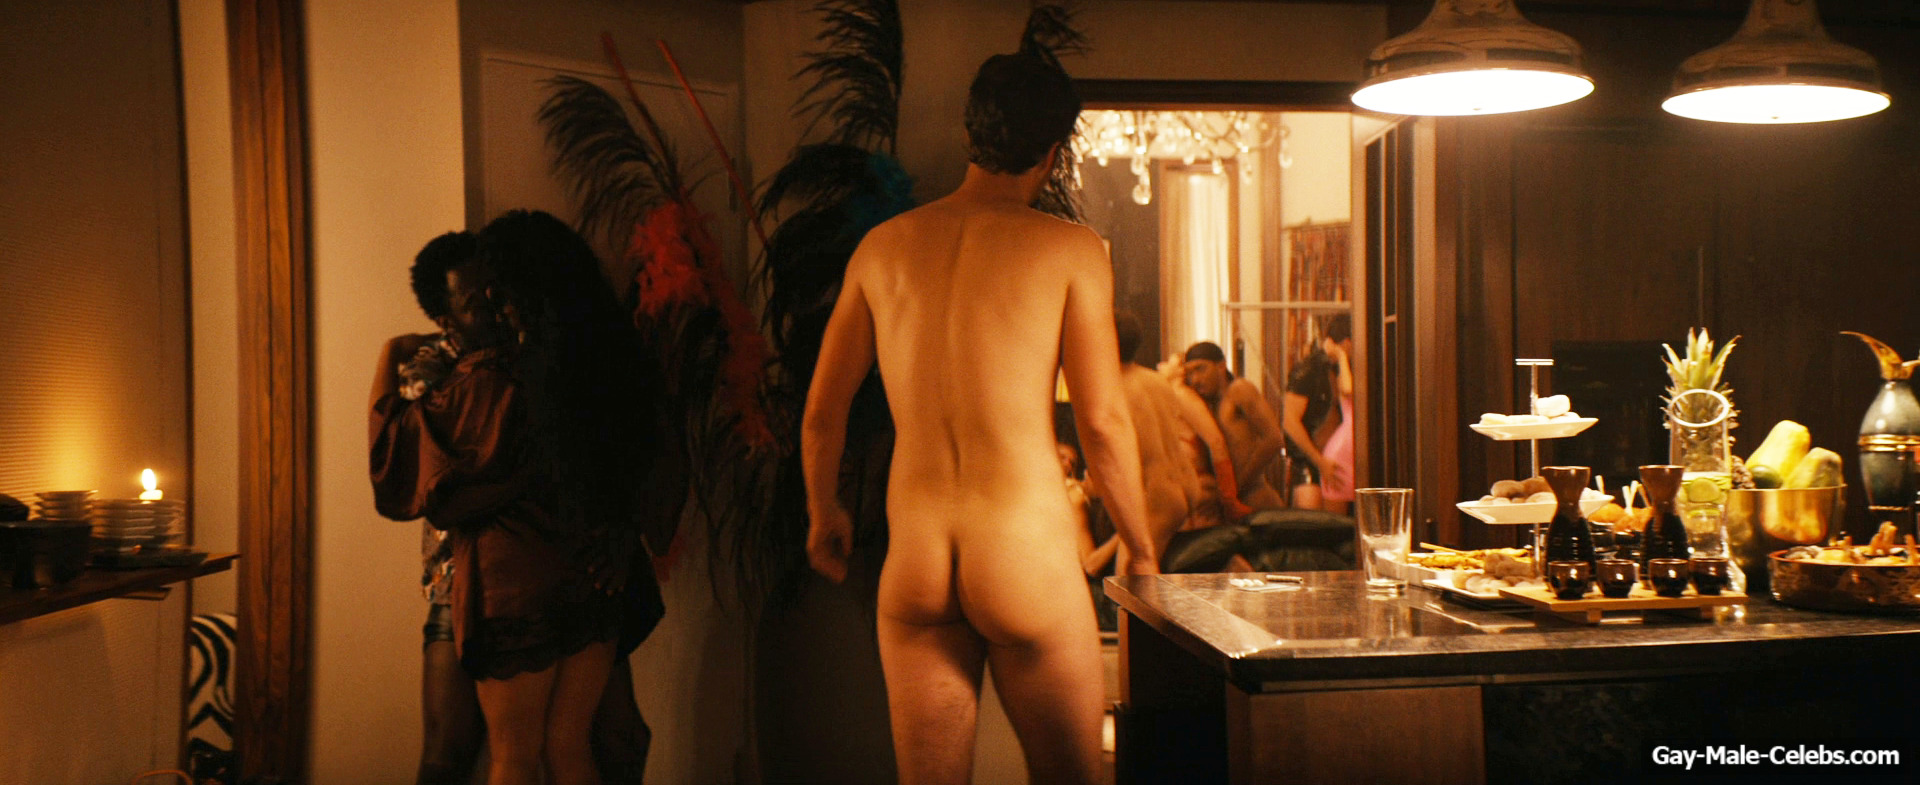 Jack Quaid Nude & Erotic Scenes from The Boys.